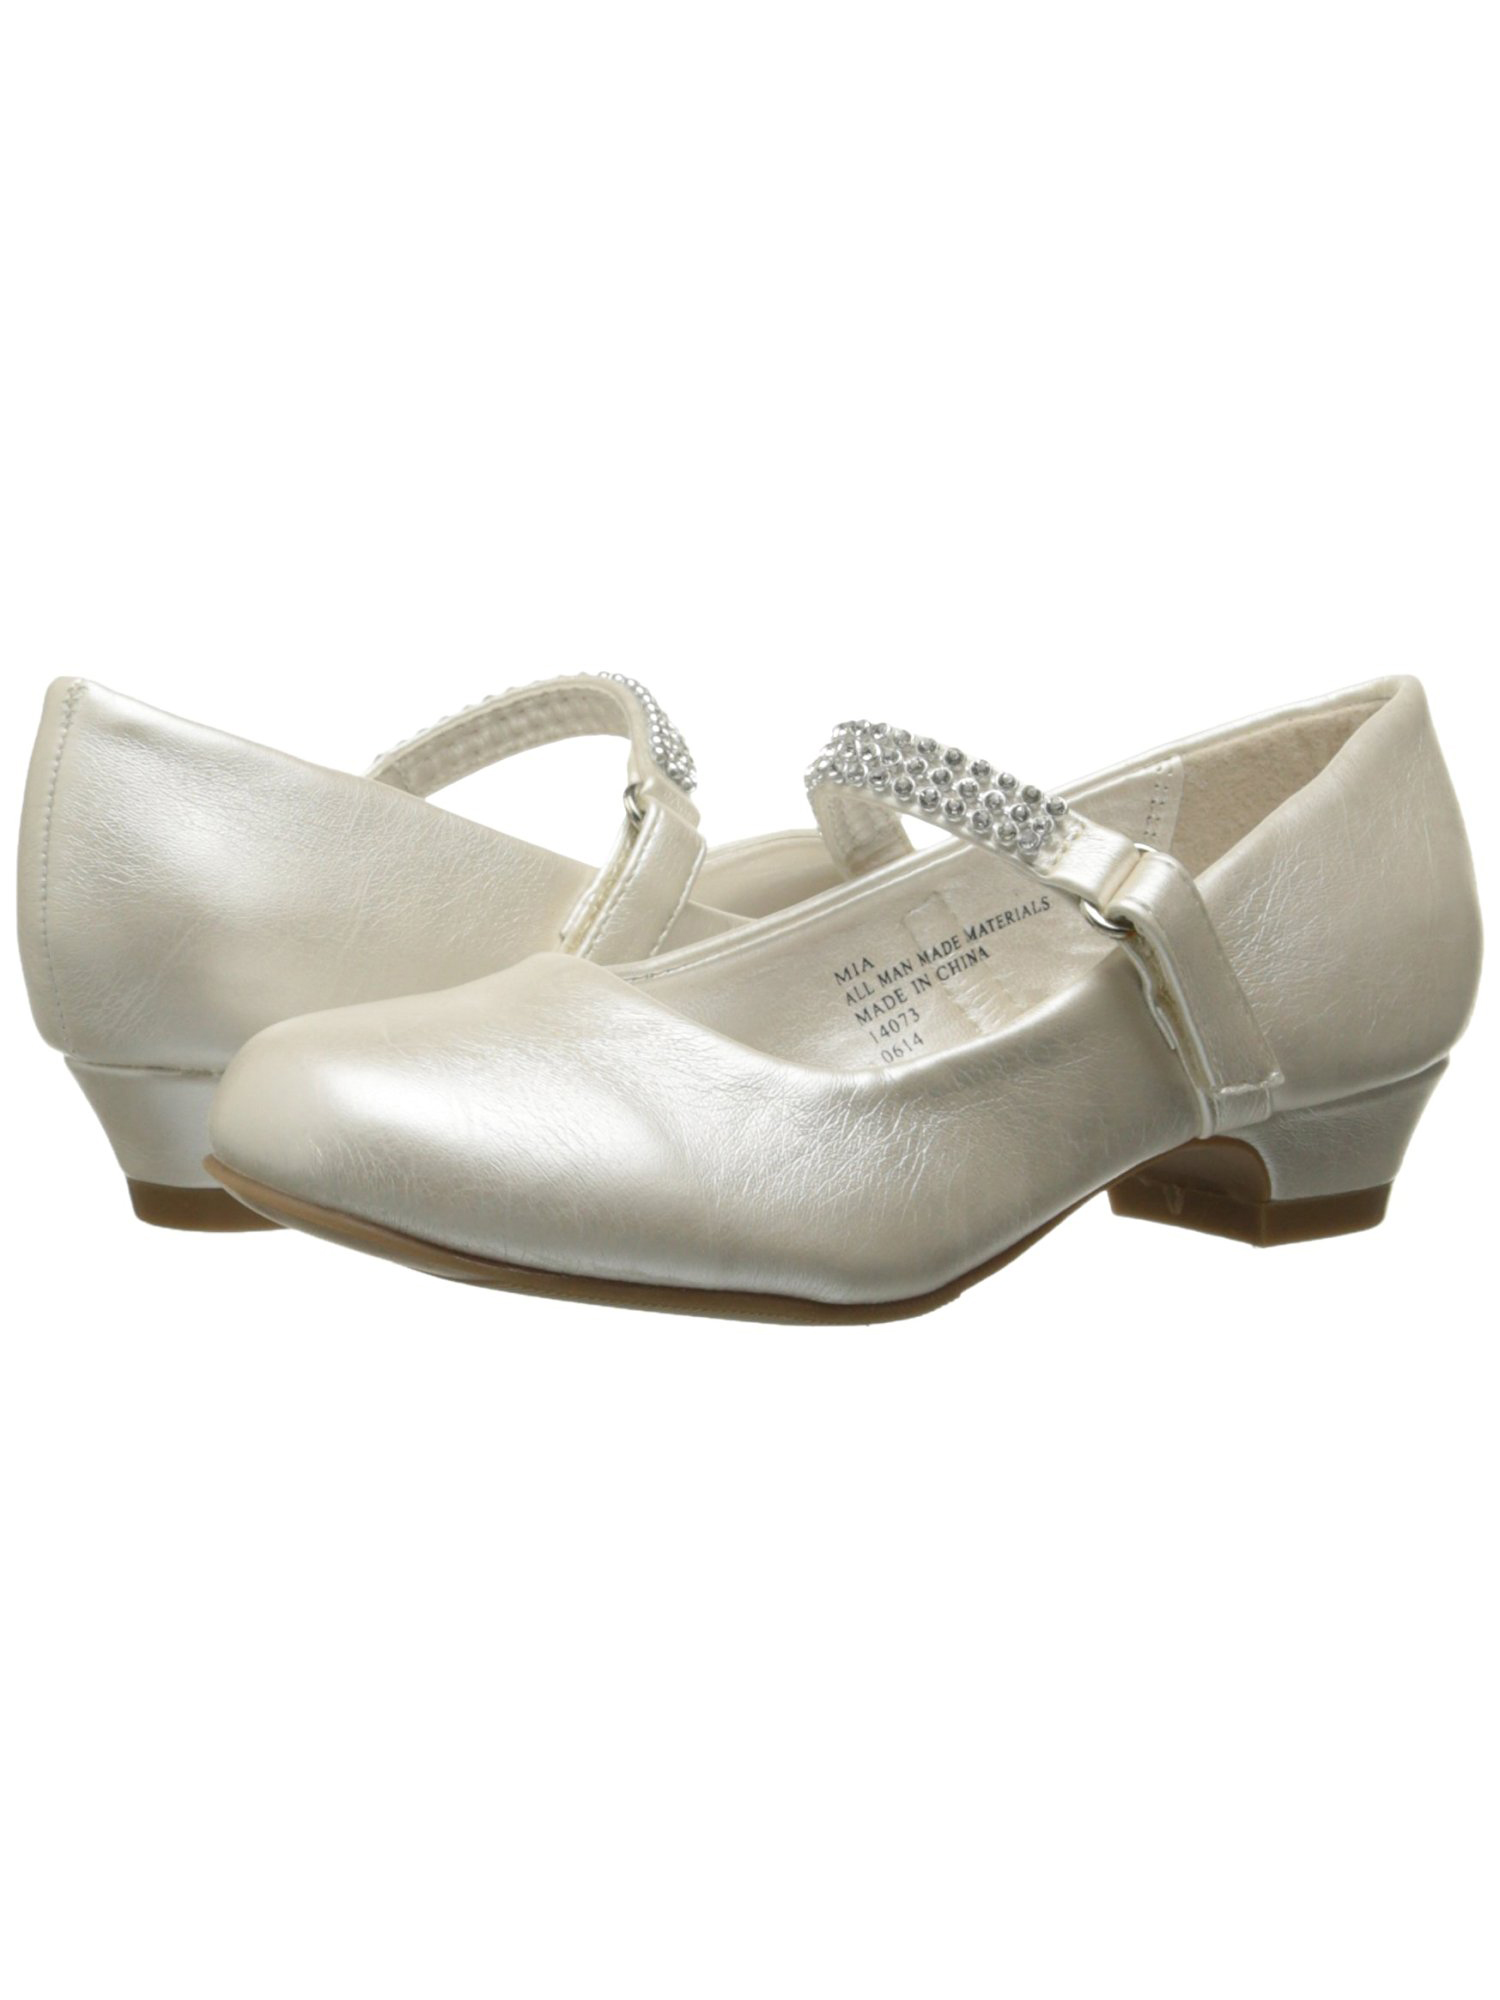 Girls Low Heel Dress Shoe With Rhinestone Strap (4, White)